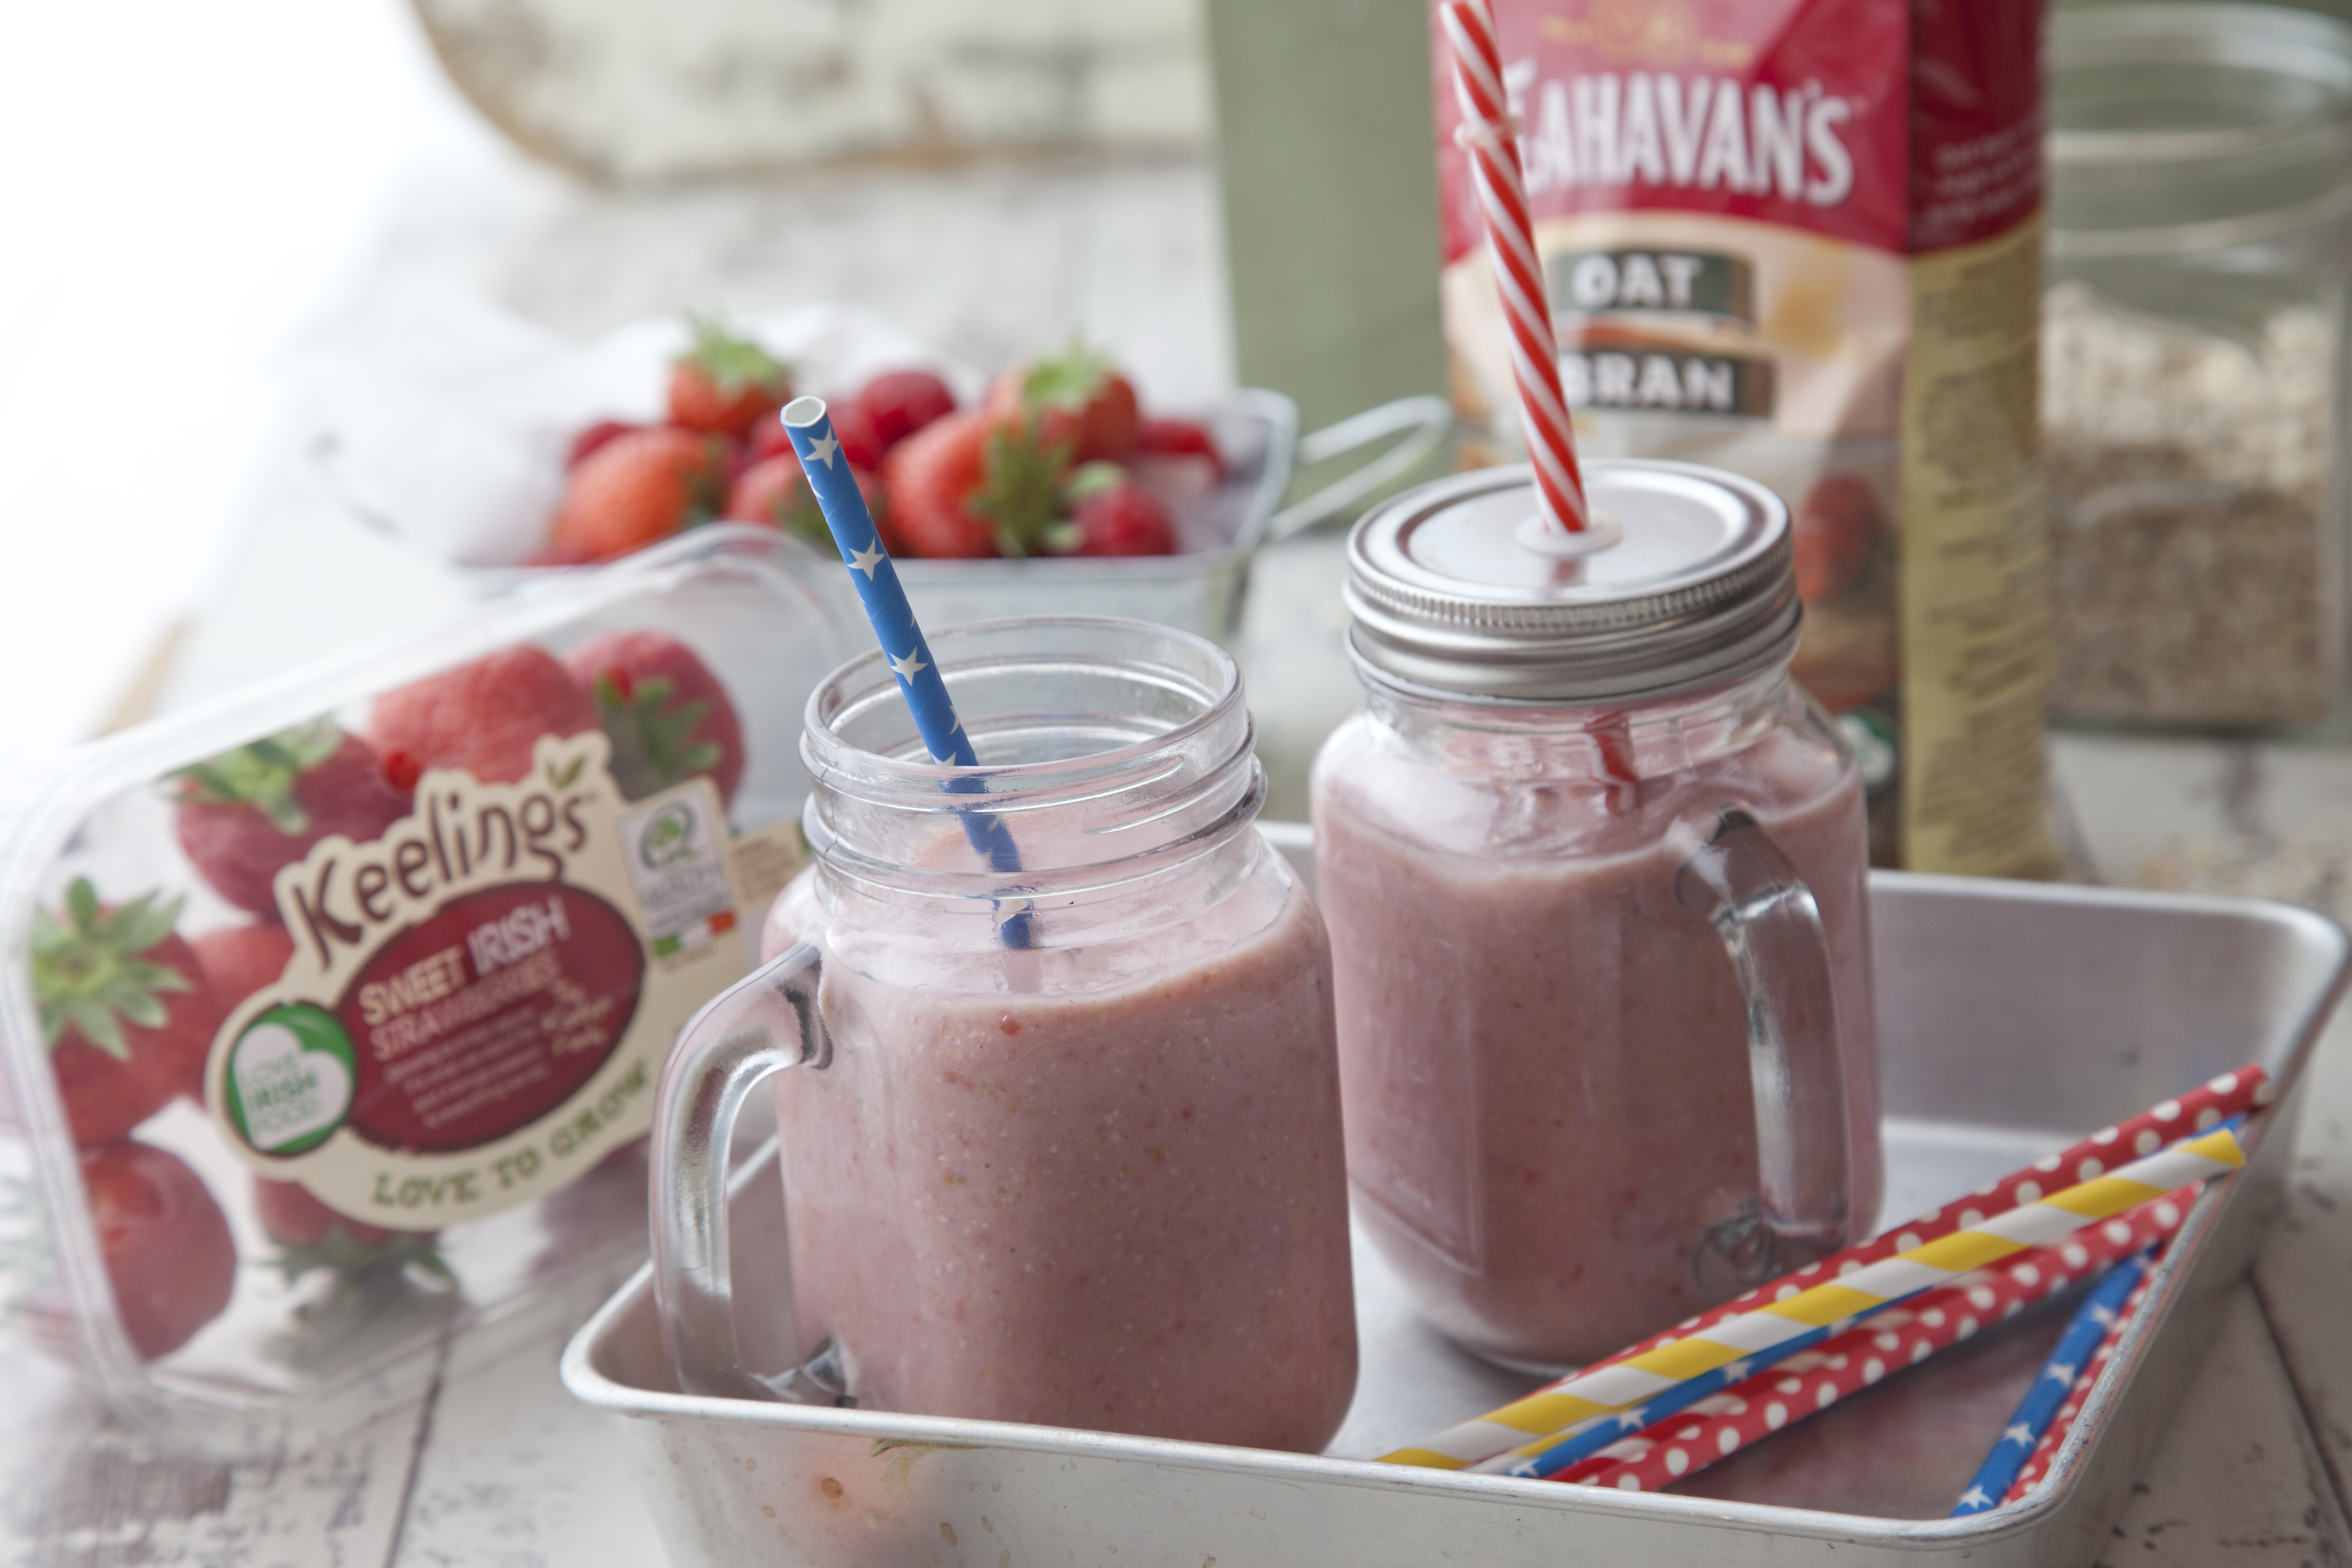 Flahavan's porridge and Keelings fruit make for some delicious winter morning smoothies